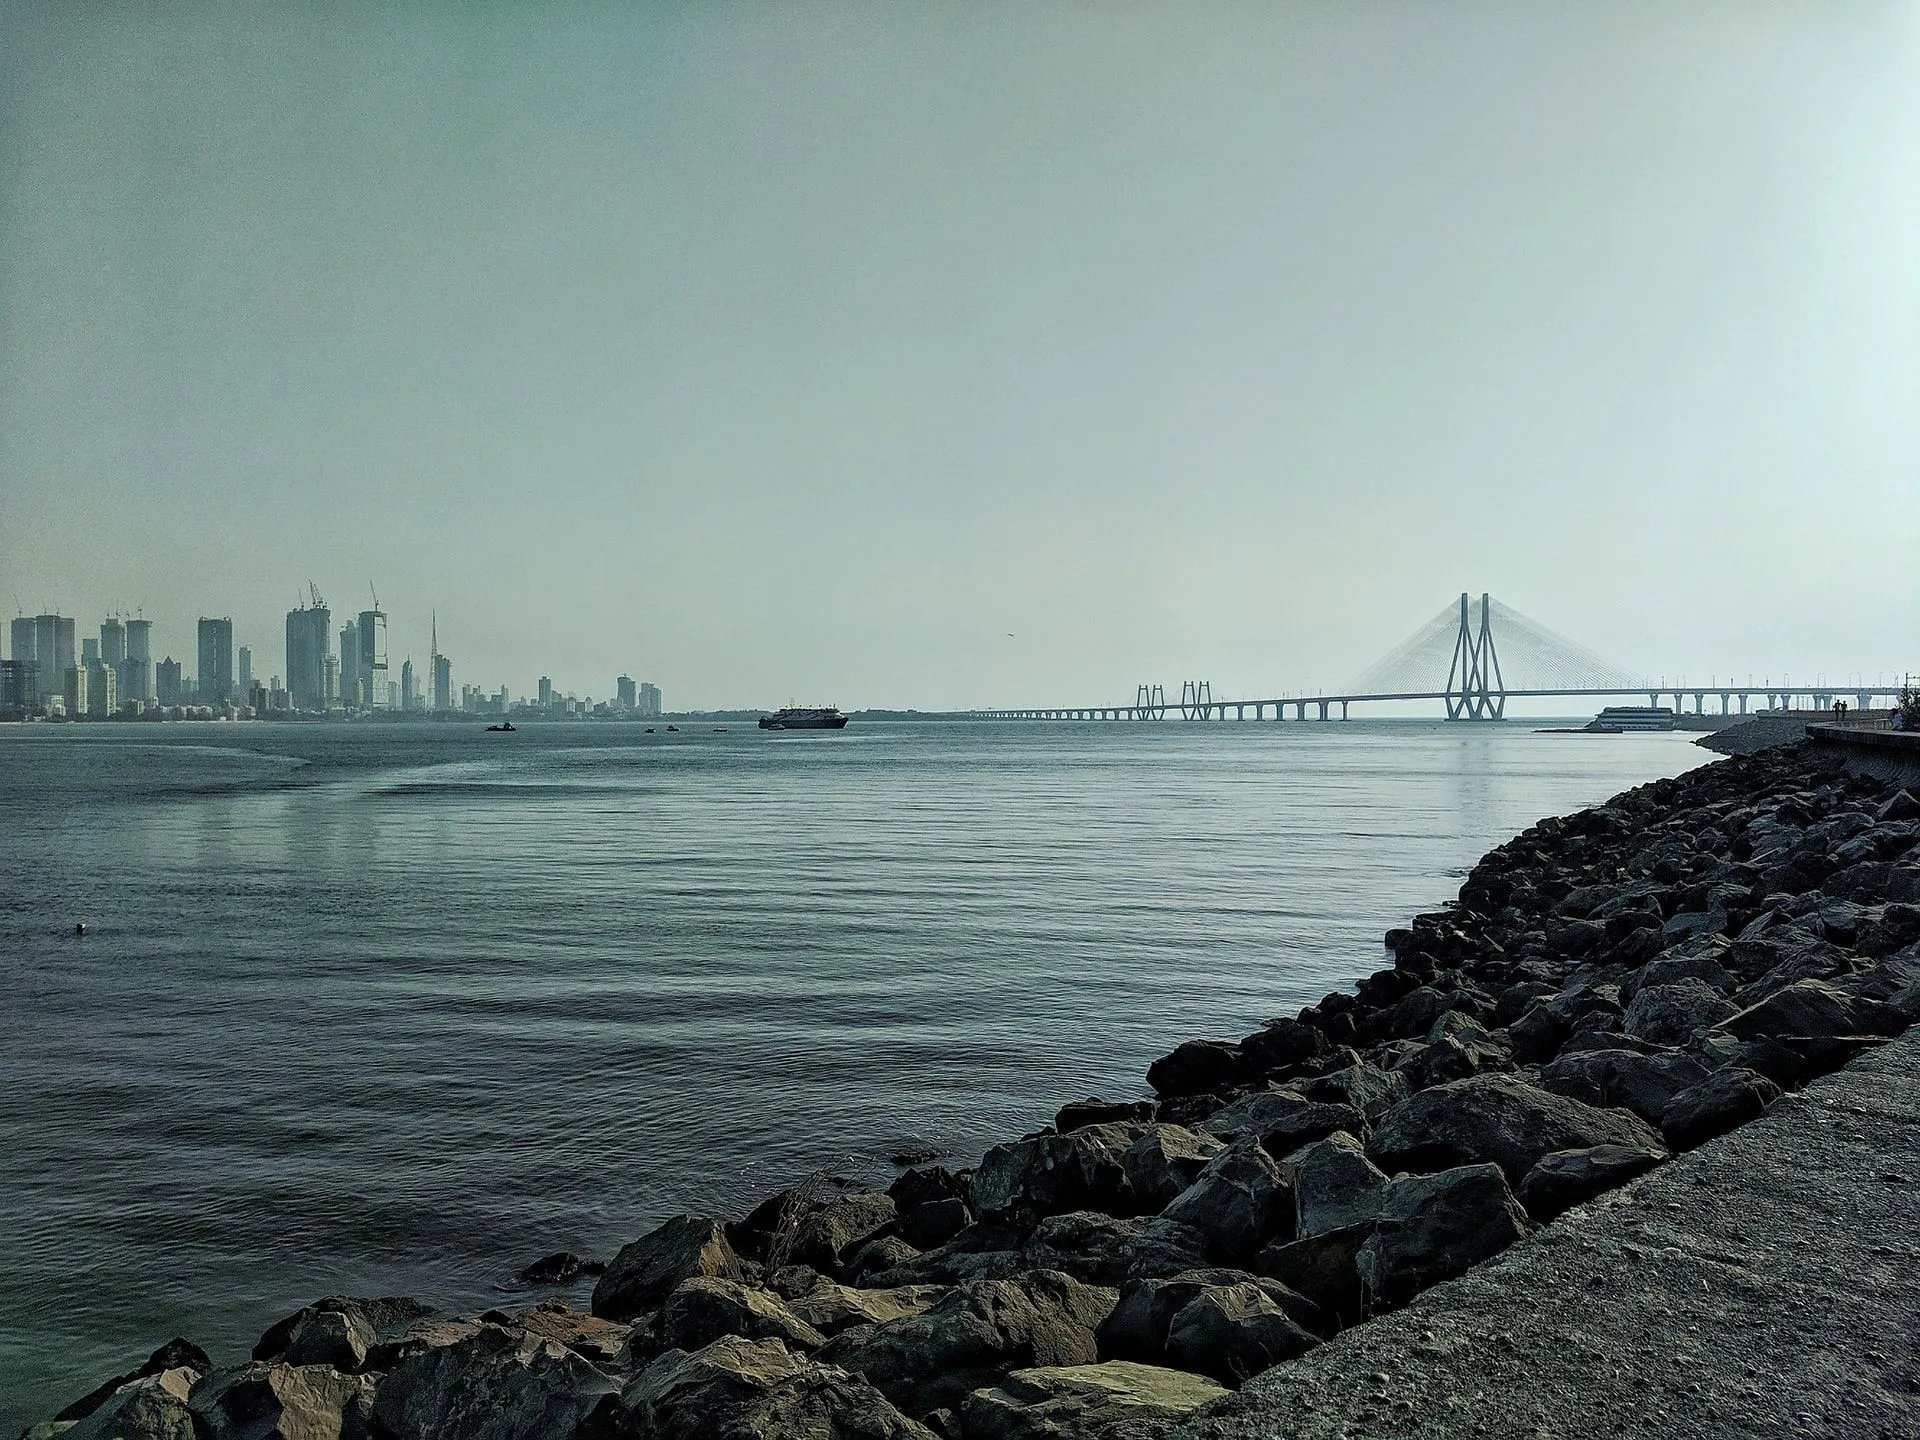 Bandra Worli sea link in Mumbai is also known as Rajiv Gandhi Seaink.